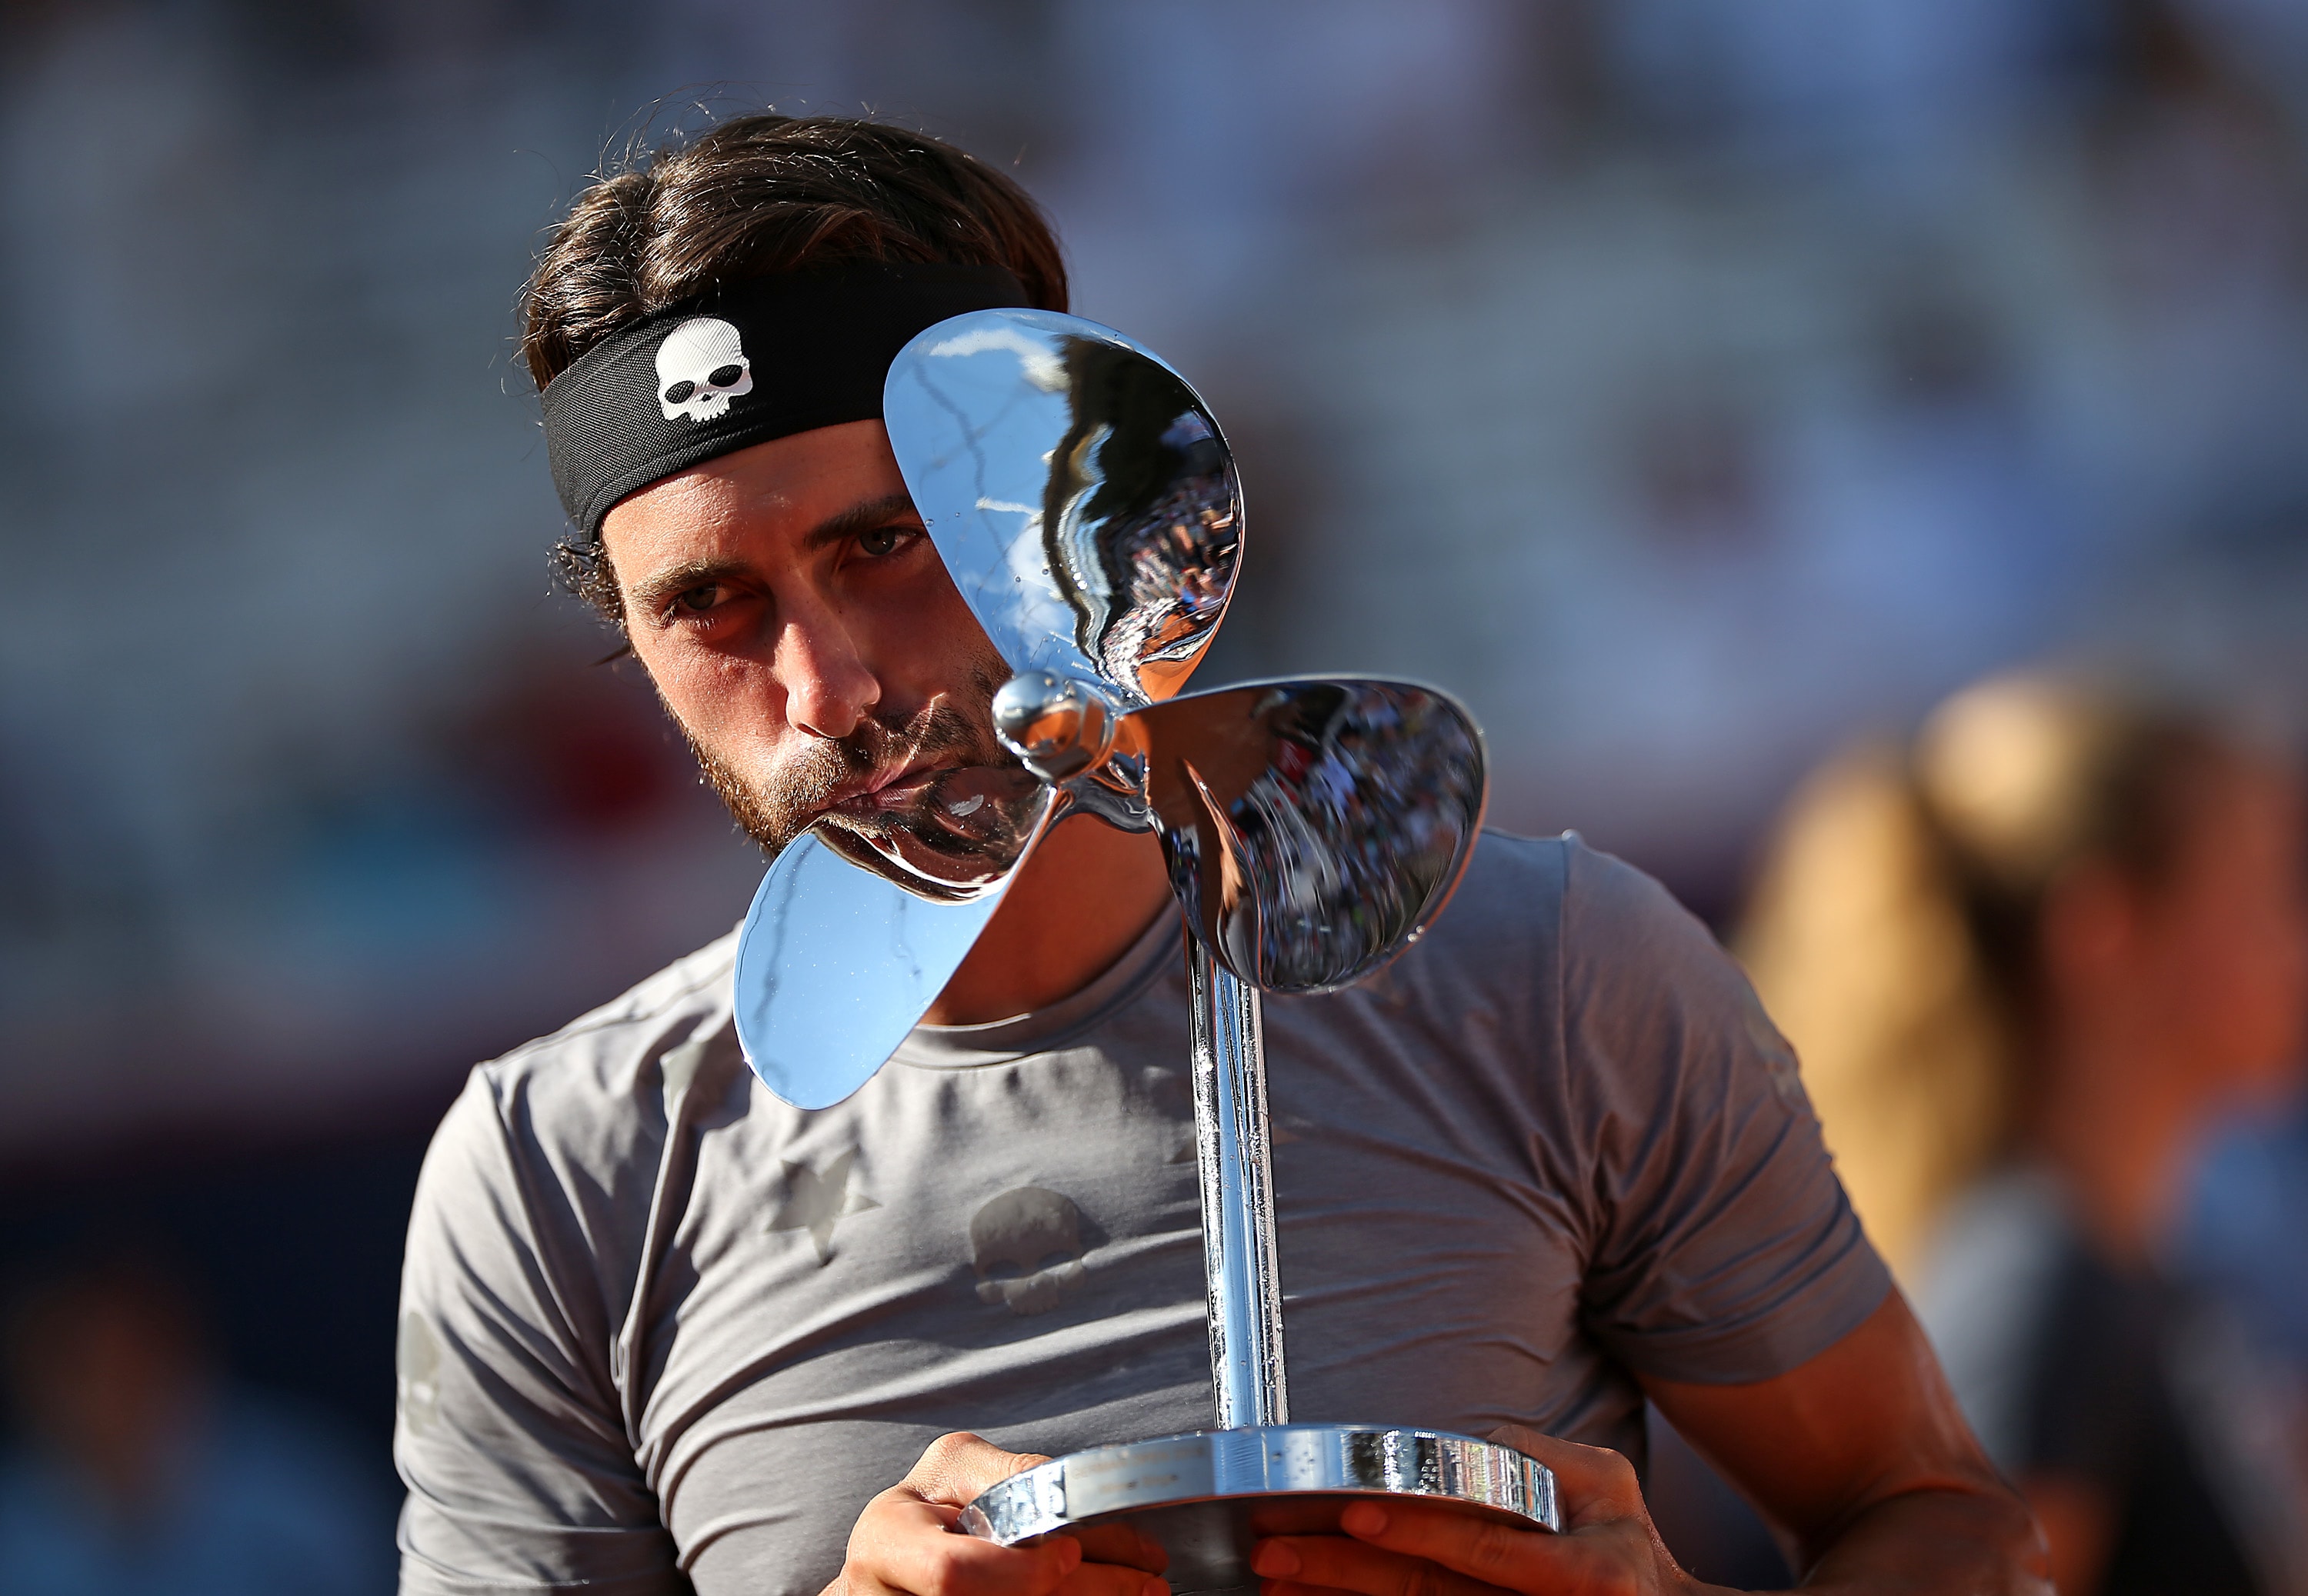 Basilashvili makes history by winning his first ATP trophy in Hamburg